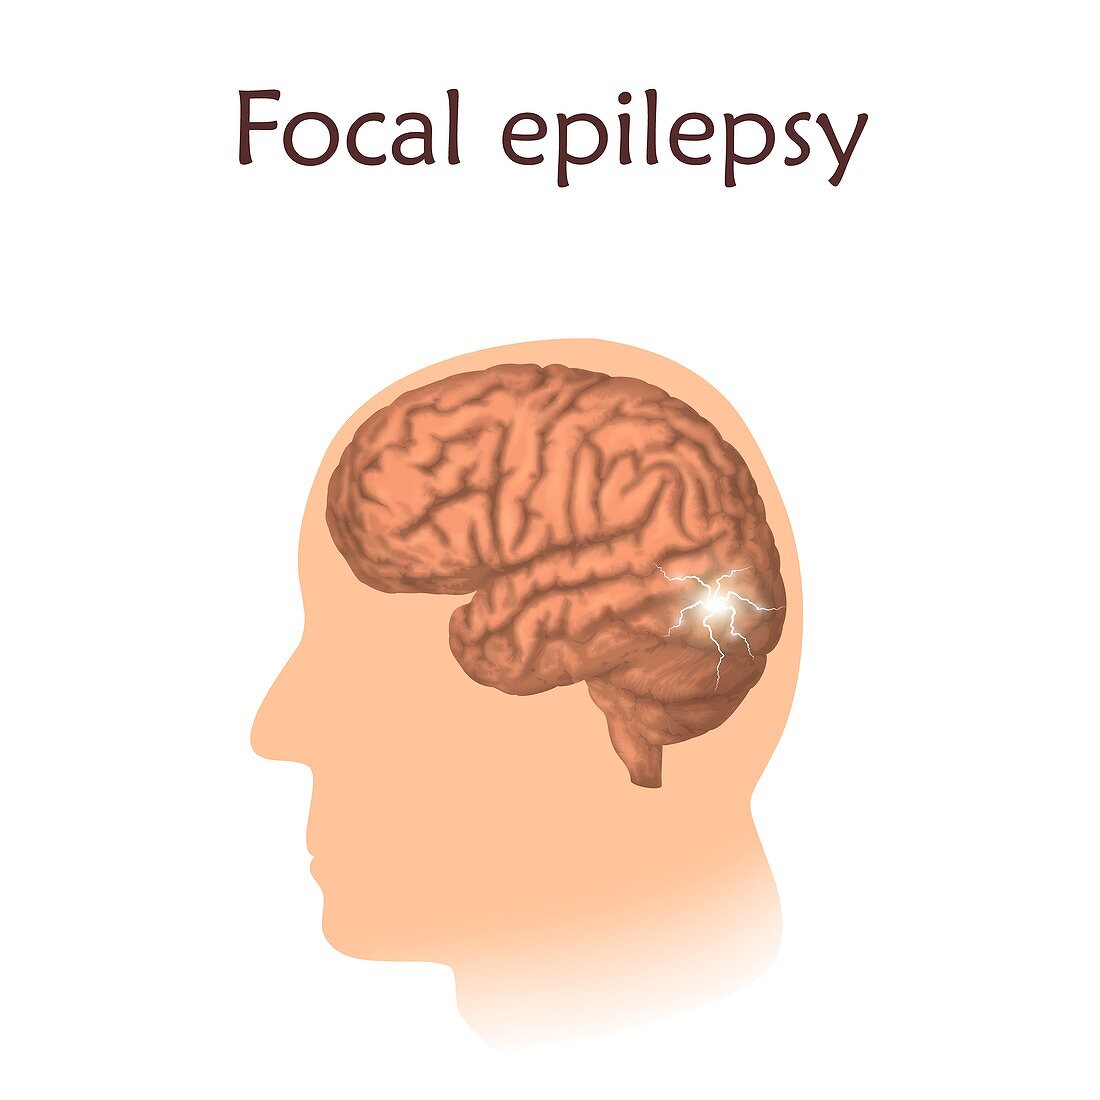 Focal epilepsy, illustration